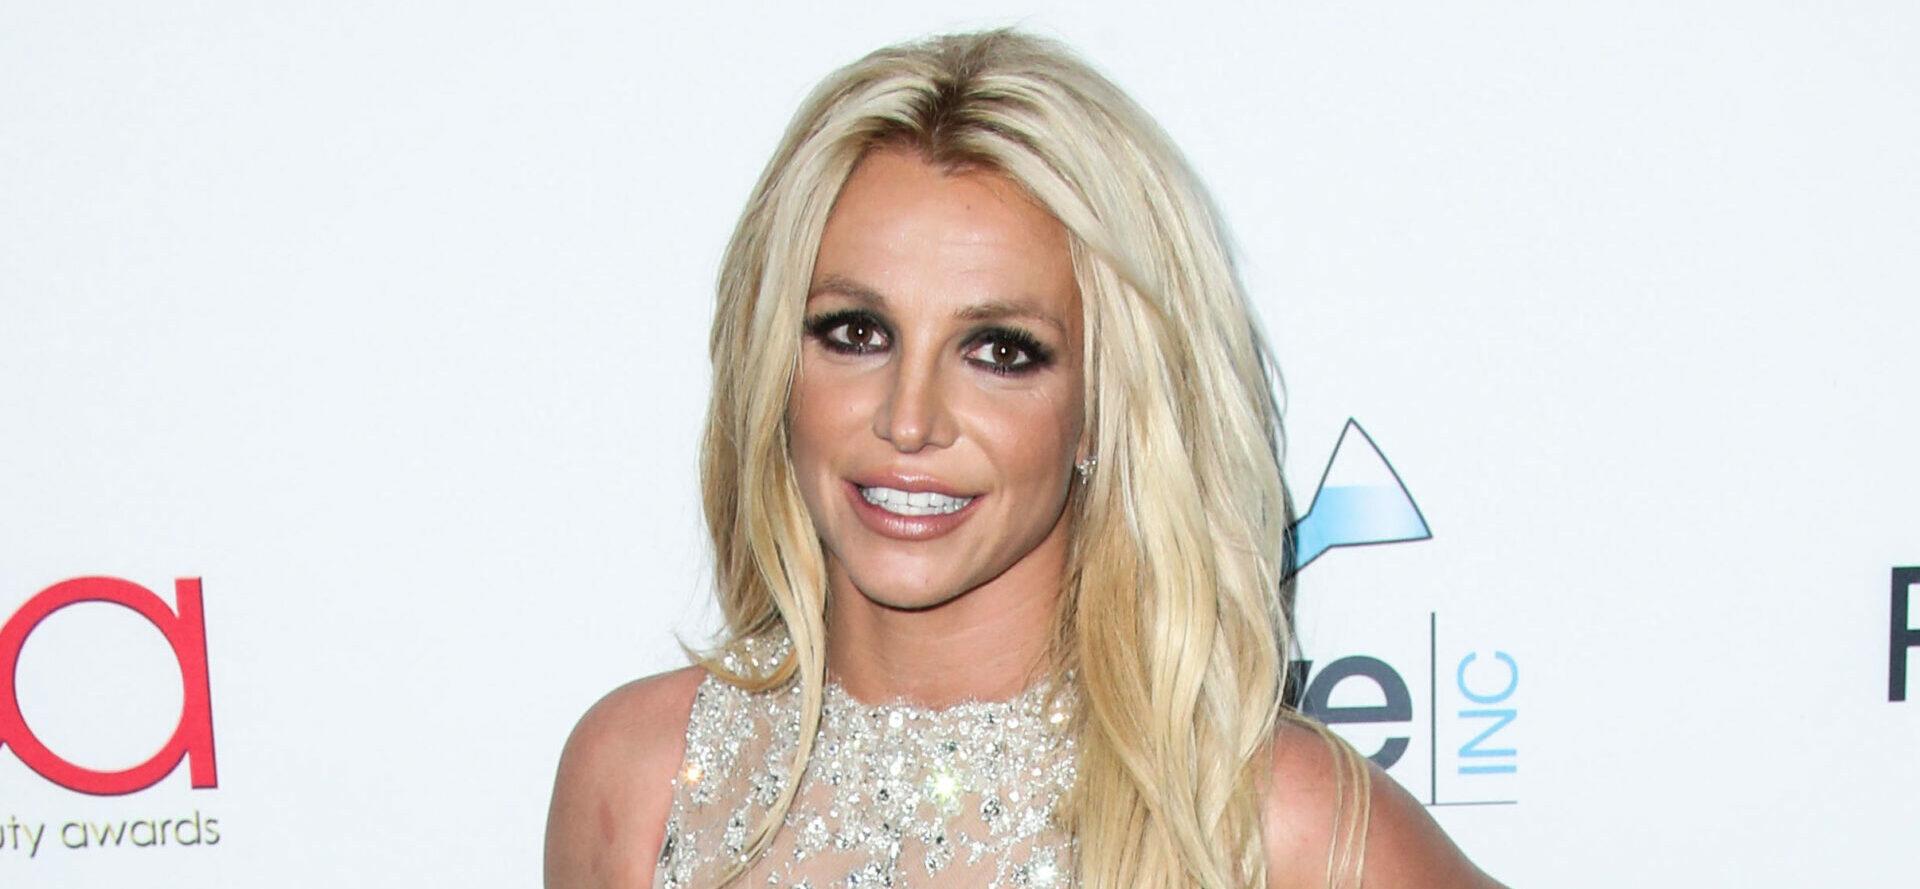 Britney Spears Claims Taking Down Her Instagram Was A ‘Misunderstanding’